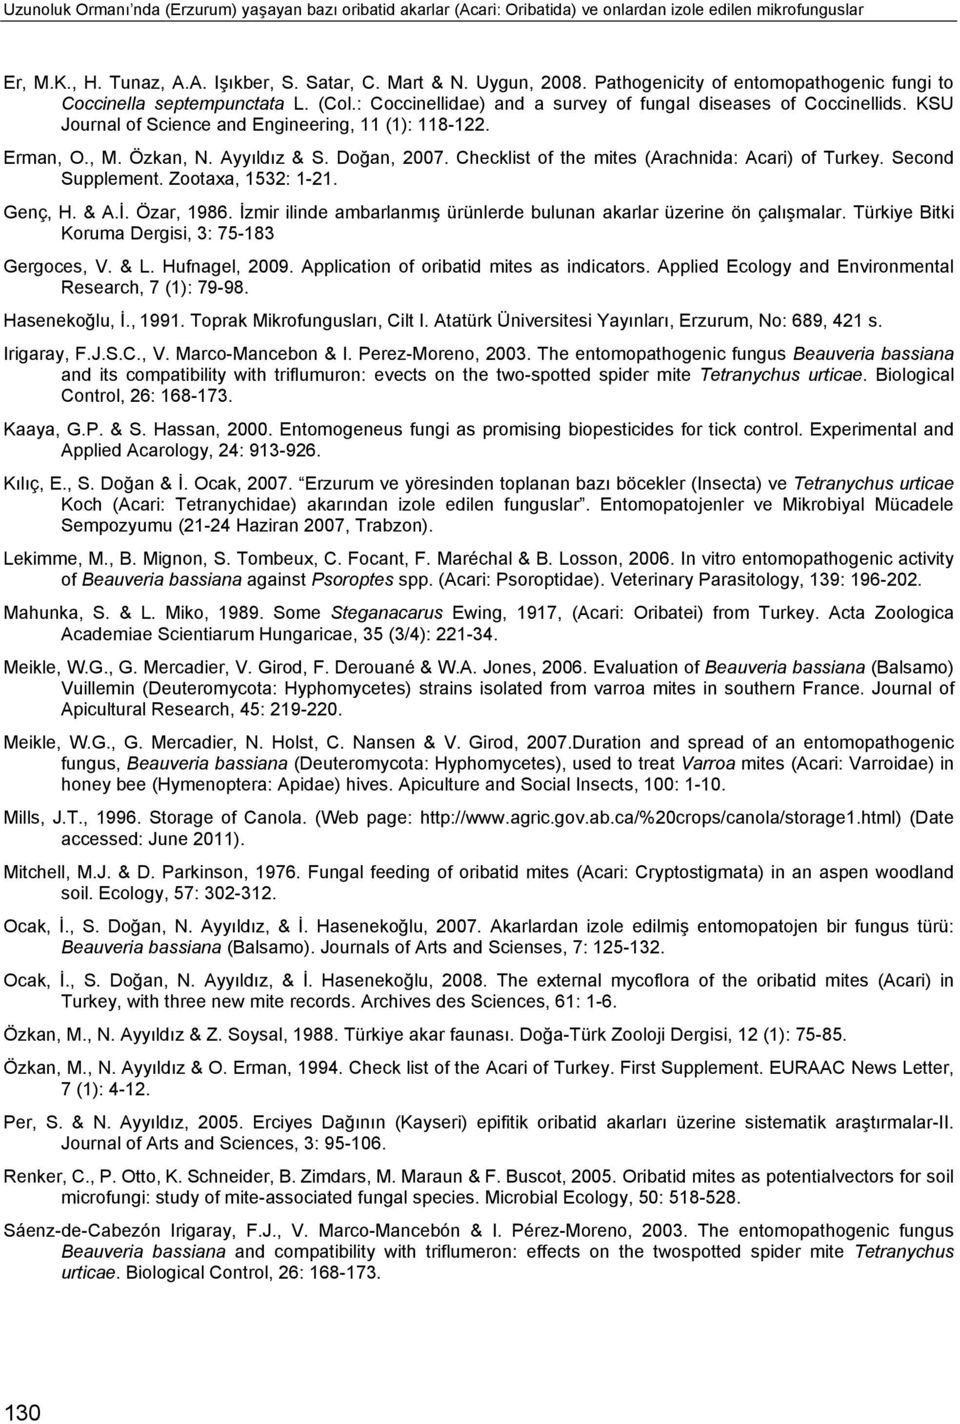 Erman, O., M. Özkan, N. Ayyıldız & S. Doğan, 2007. Checklist of the mites (Arachnida: Acari) of Turkey. Second Supplement. Zootaxa, 1532: 1-21. Genç, H. & A.İ. Özar, 1986.